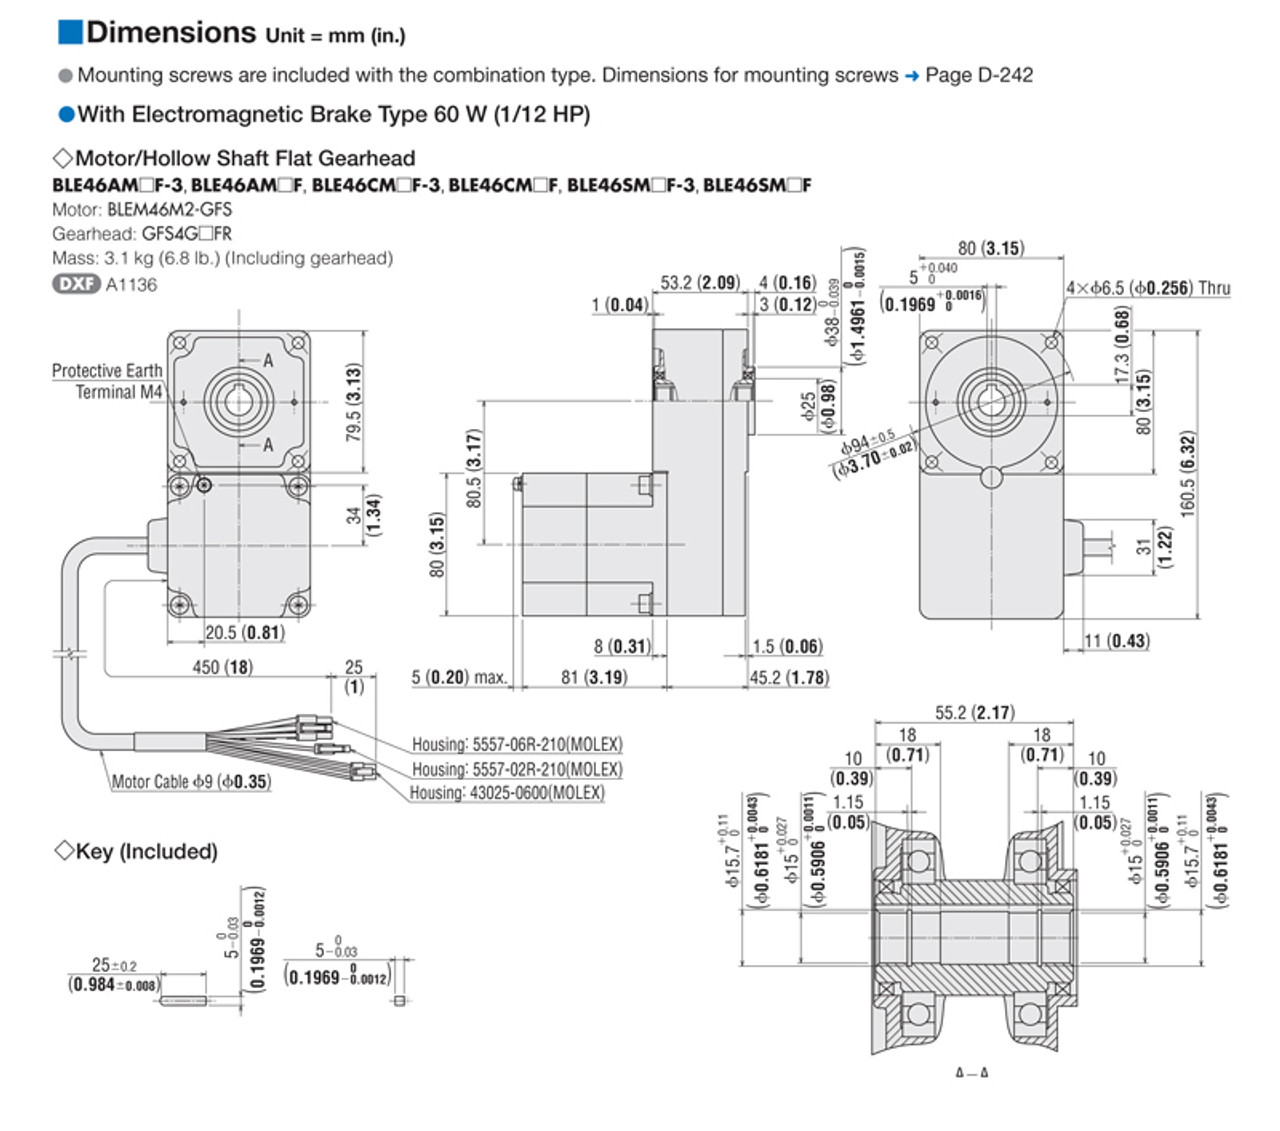 BLEM46M2-GFS / GFS4G15FR - Dimensions